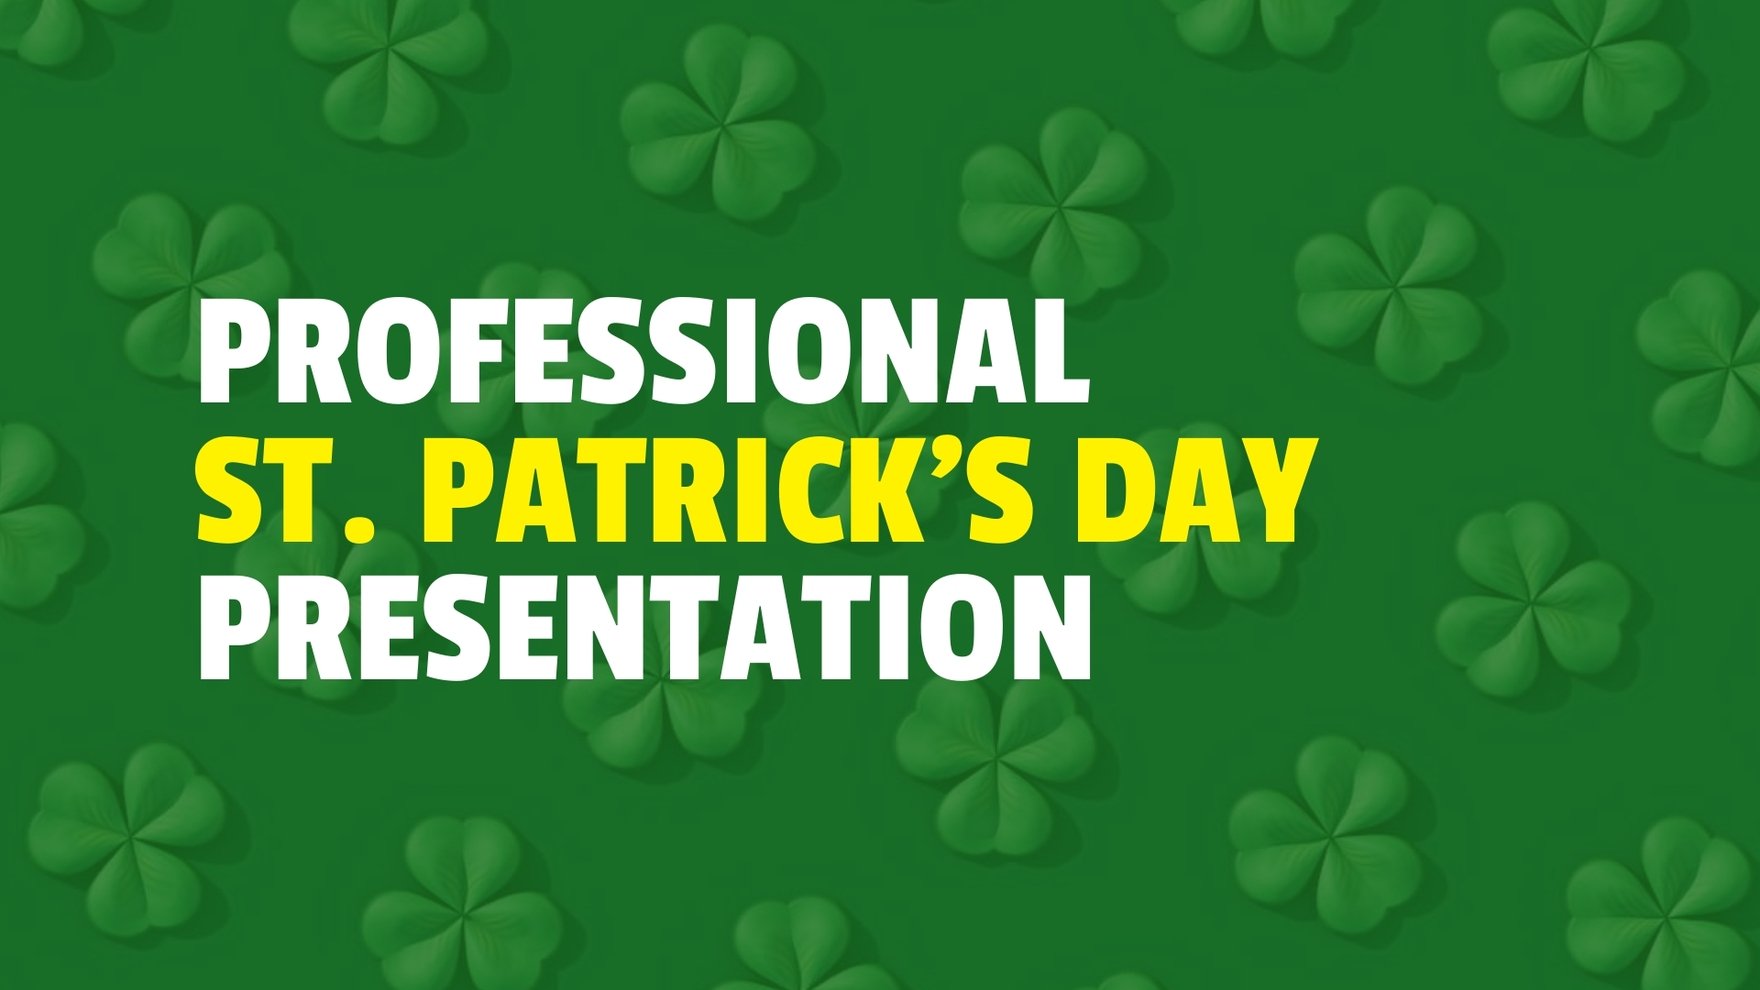 Professional St. Patrick's Day Presentation